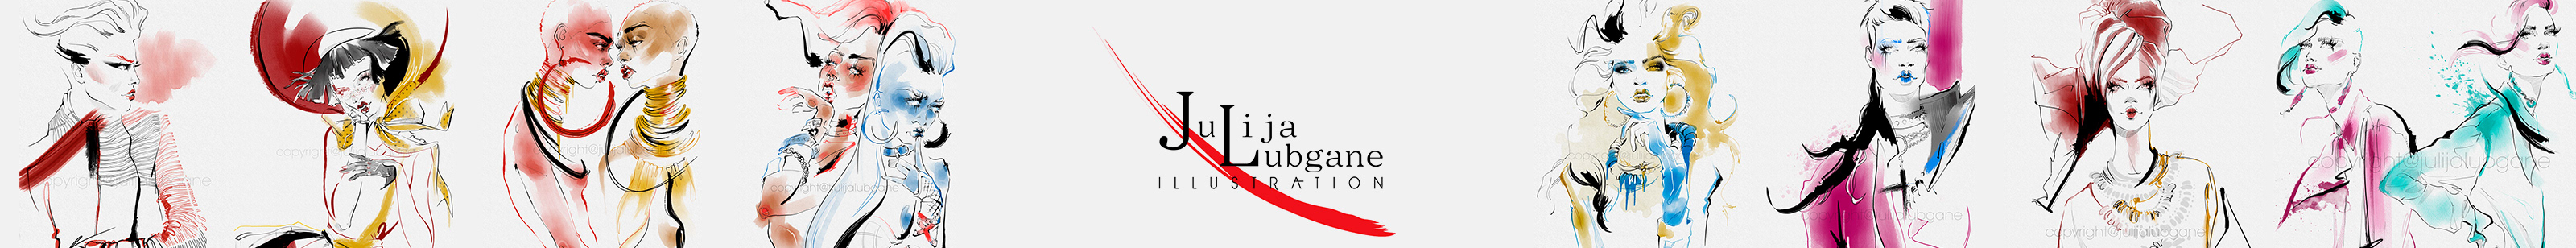 Julija Lubgane's profile banner